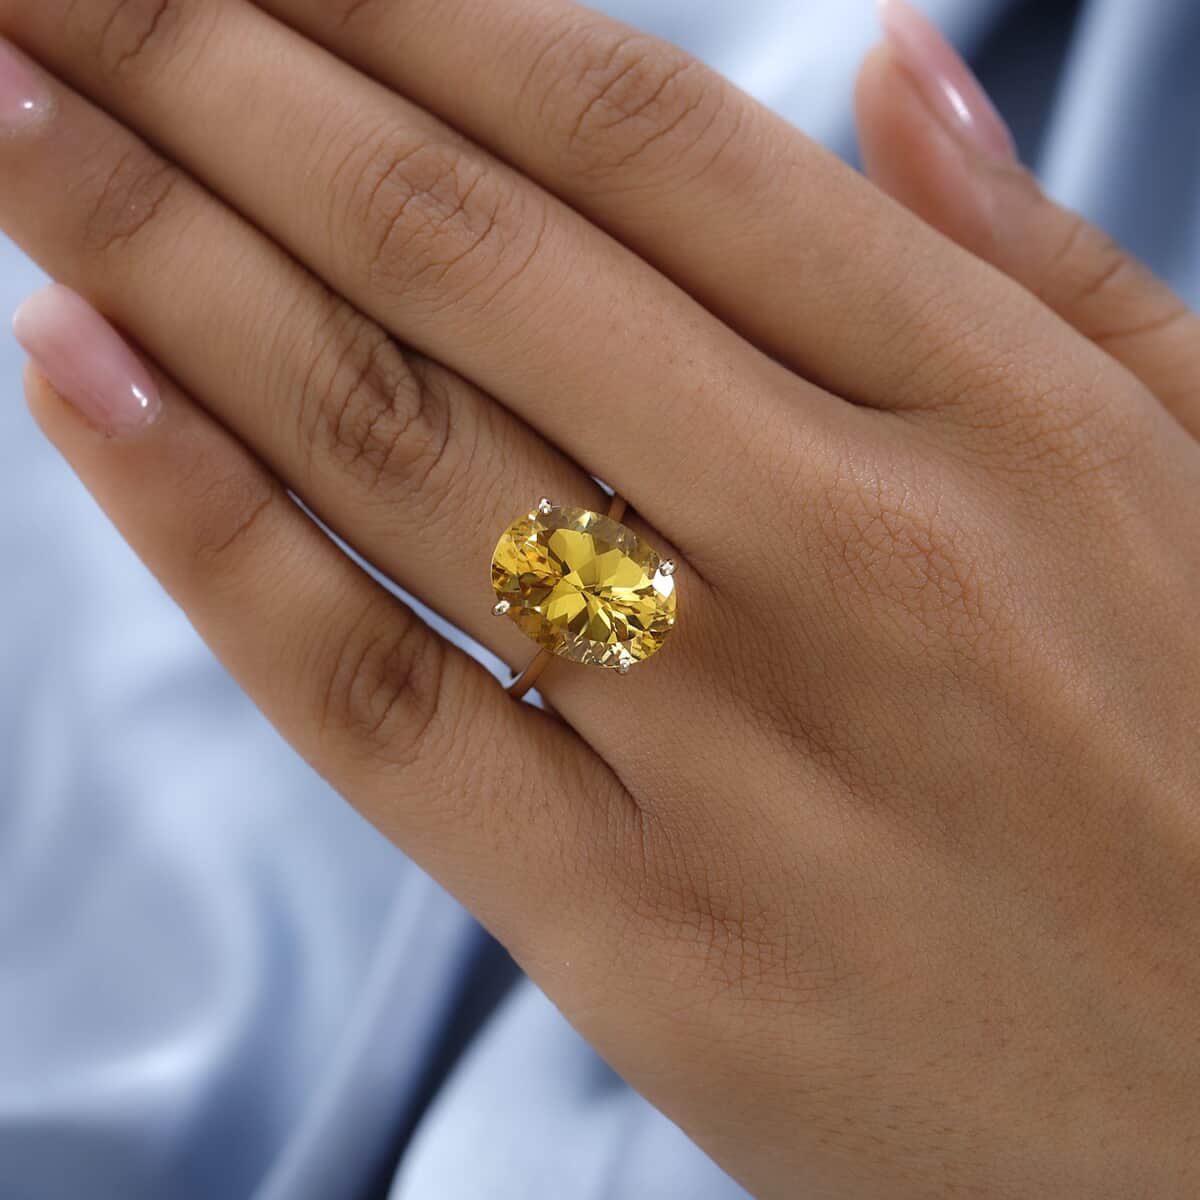 LUXORO 10K Yellow Gold Premium Brazilian Golden Apatite Solitaire Ring (Size 5.0) 2.30 Grams 11.10 ctw image number 2